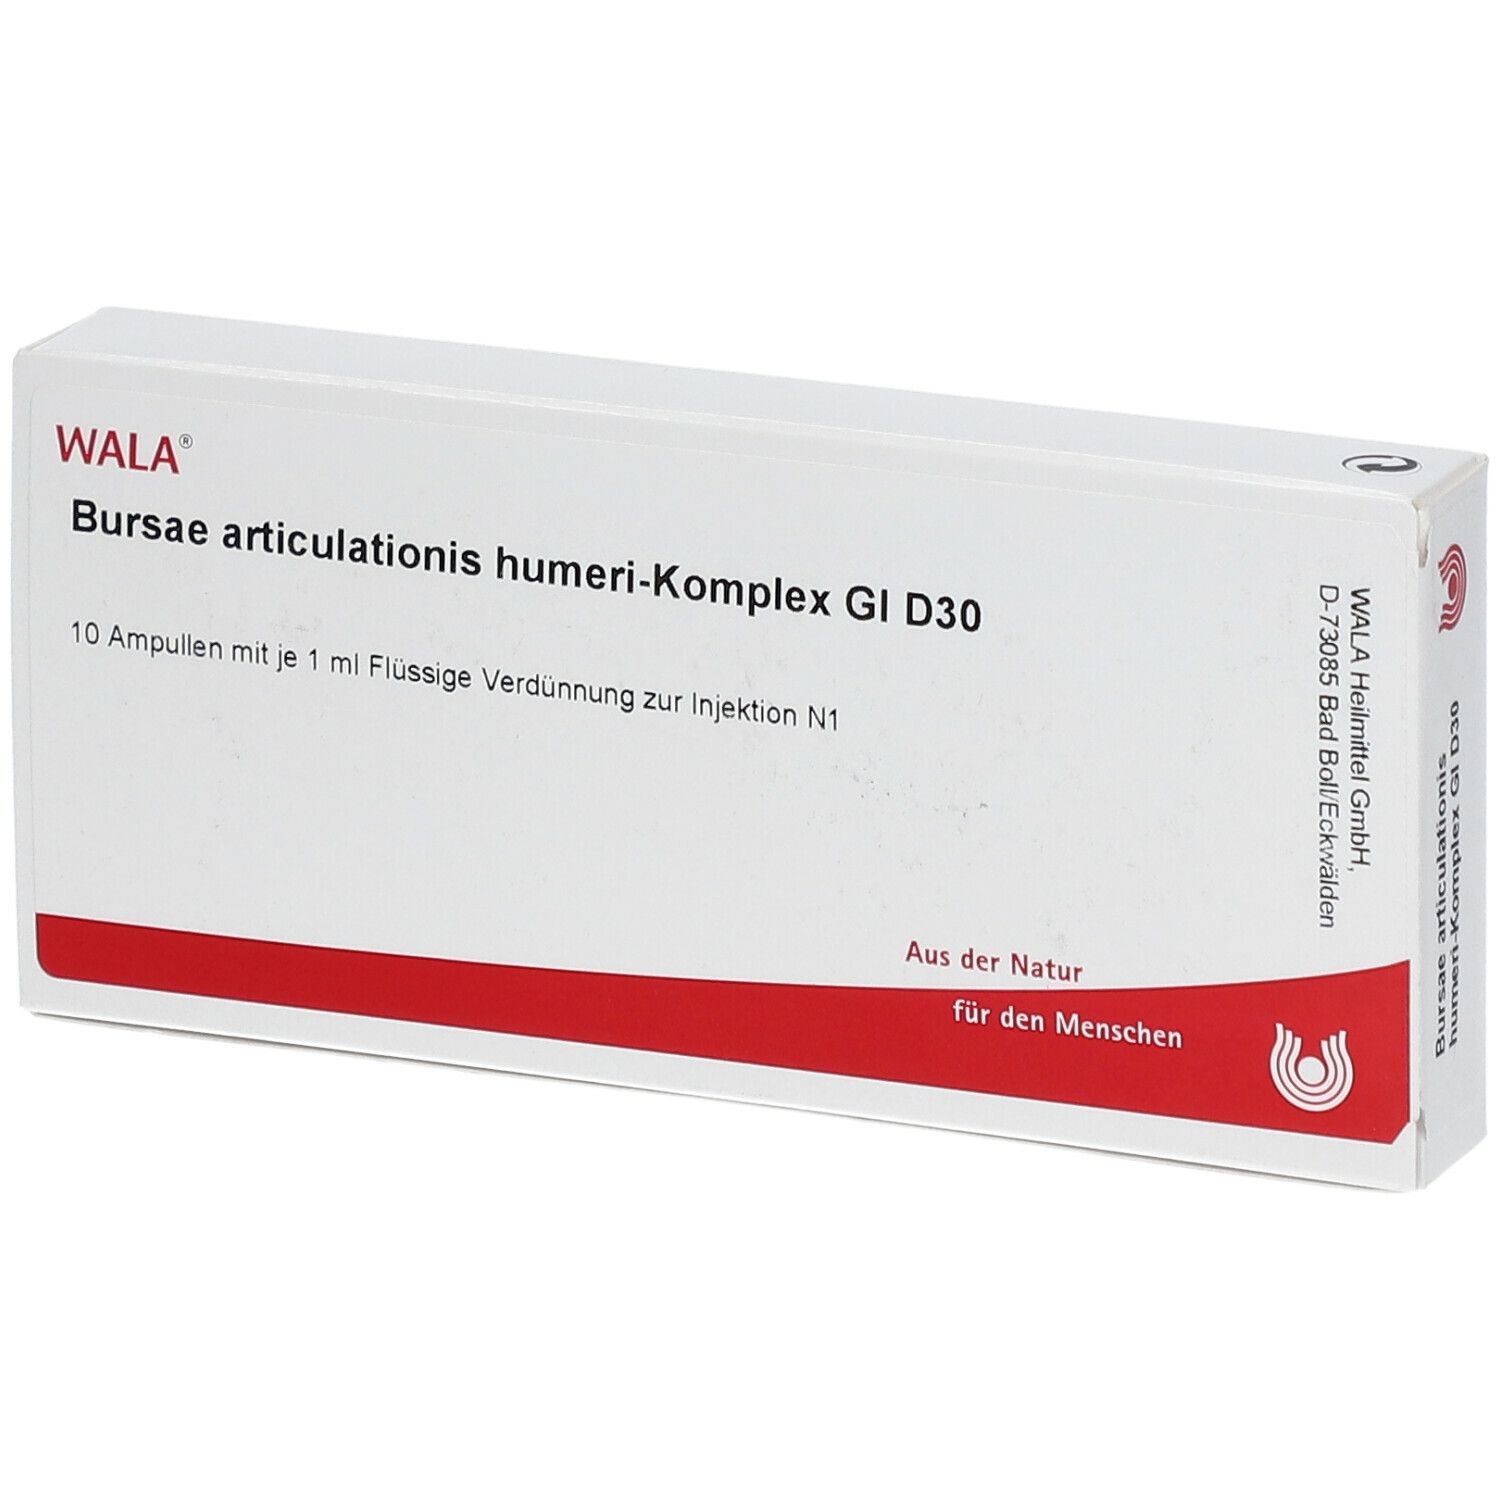 WALA® Bursae articulationis humeri-Komplex Gl D 30